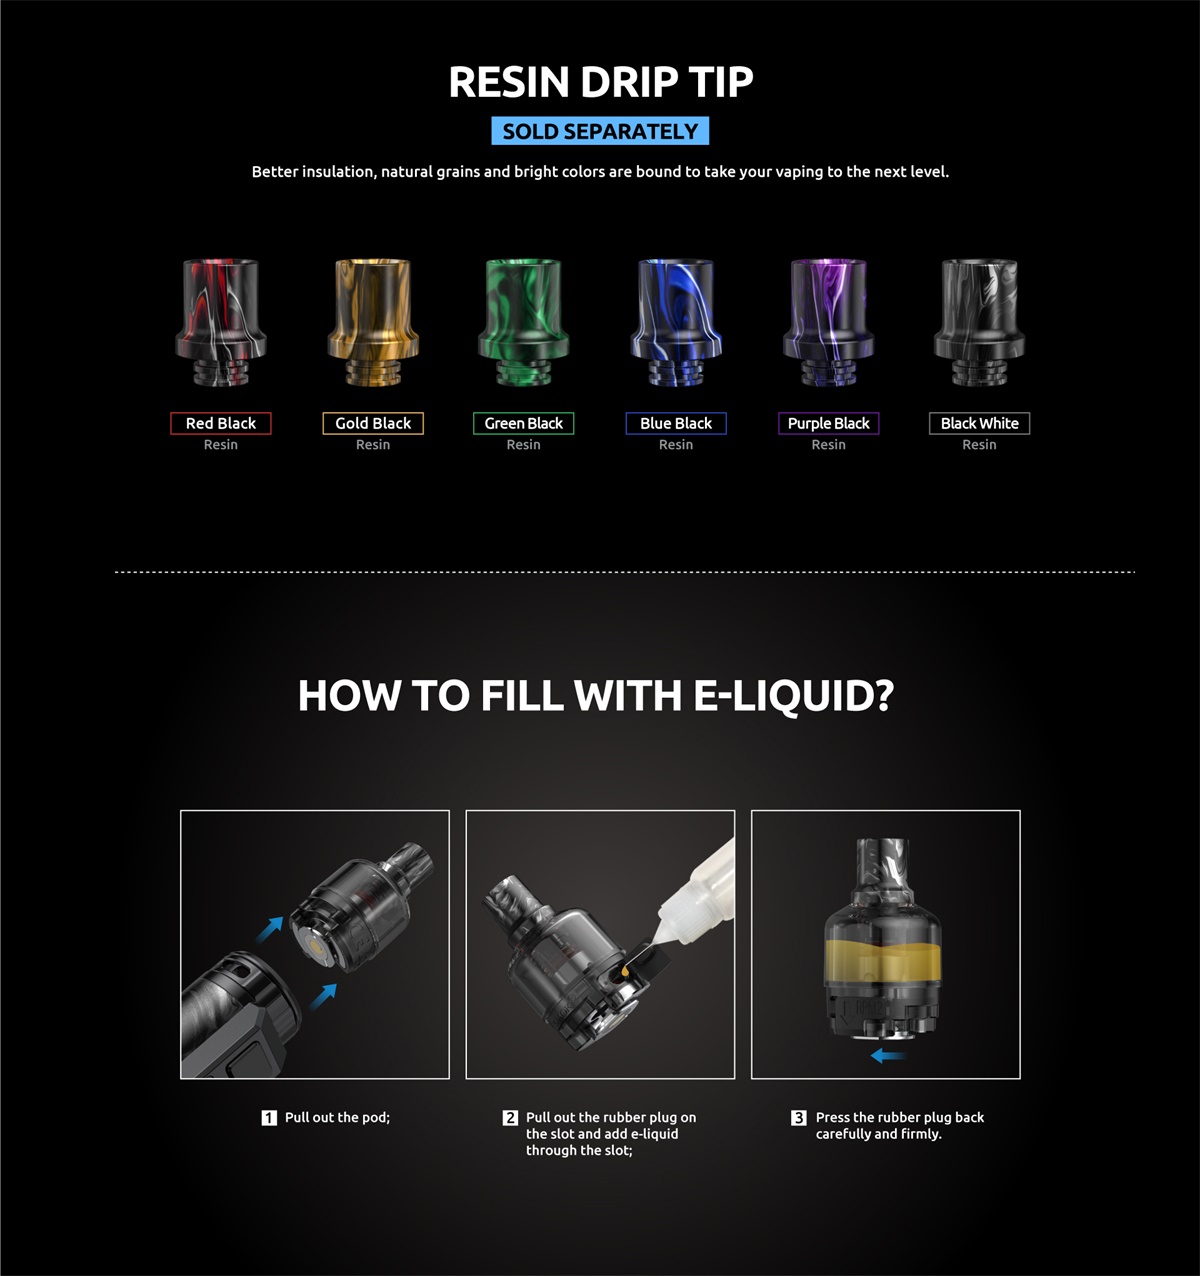 SMOK Thallo S Resin Drip Tip and E-juice Refill